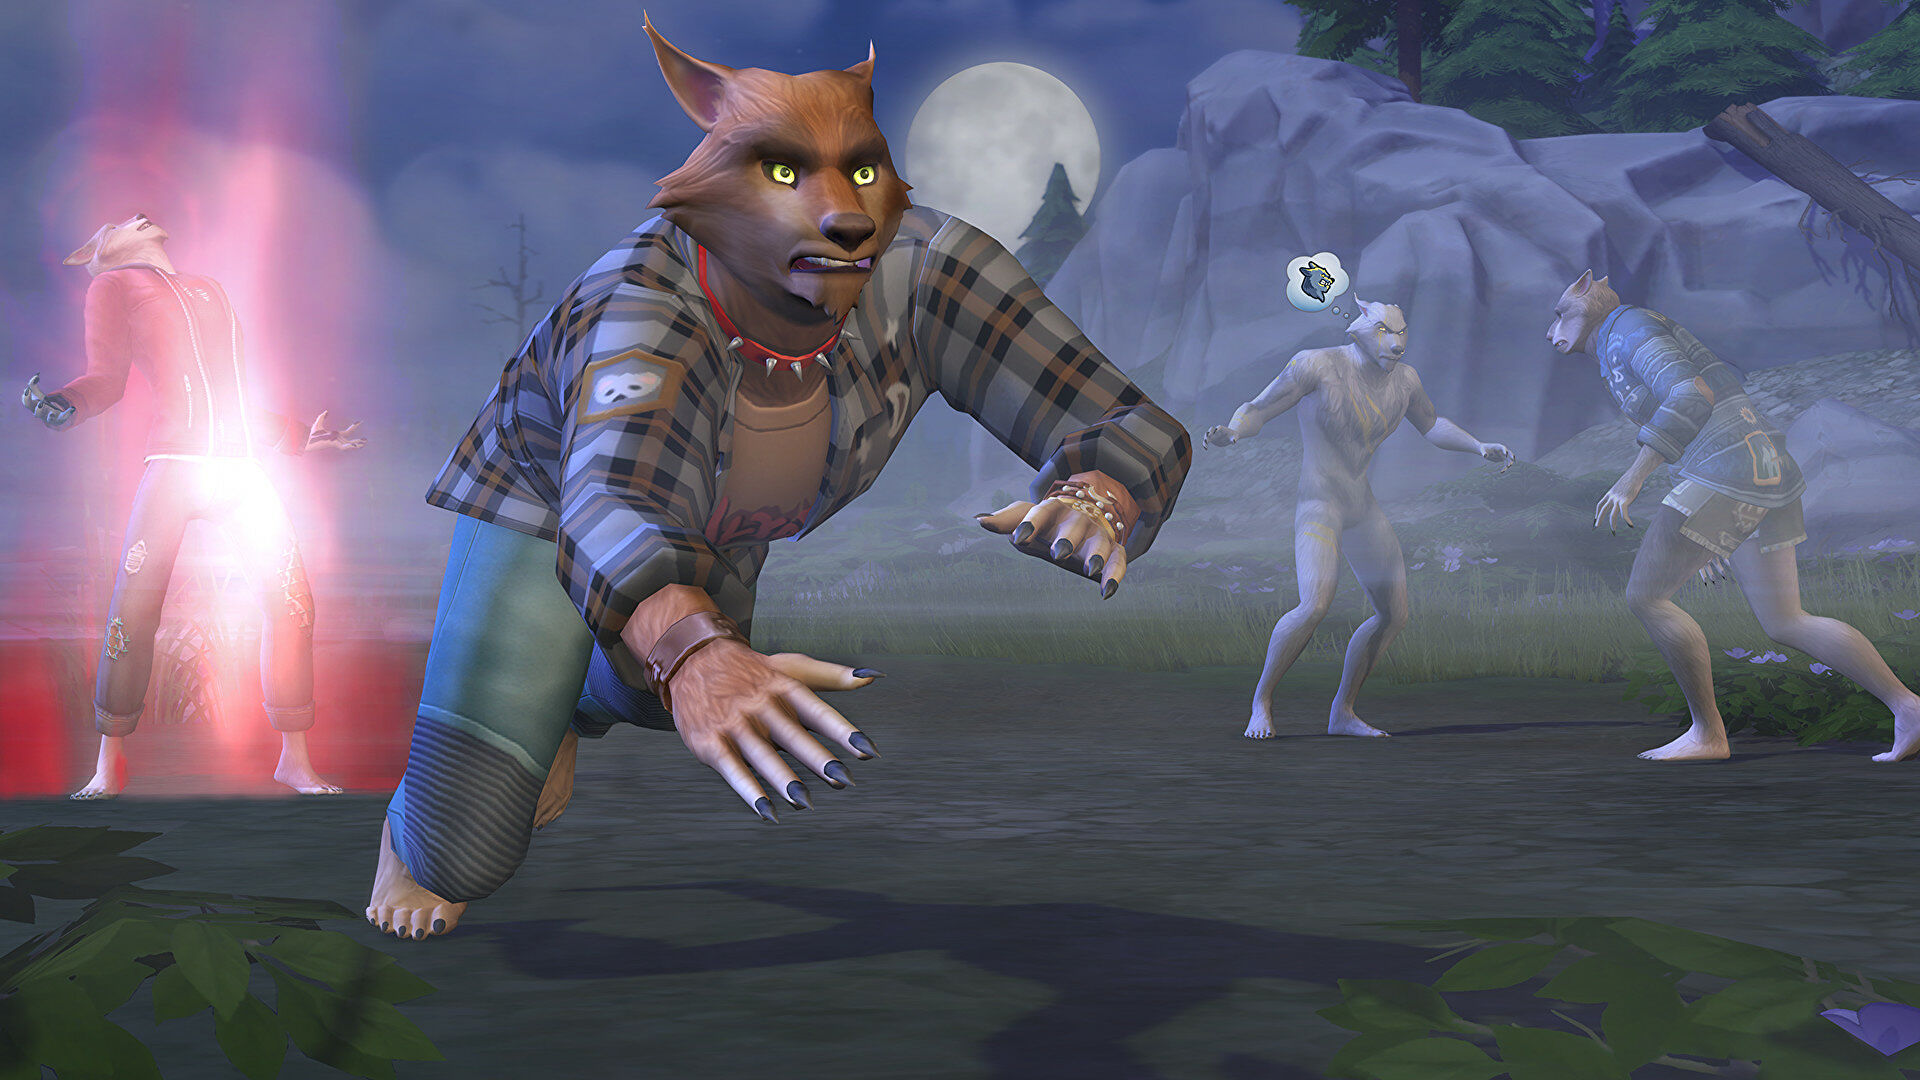 Ko te Sims 4 Werewolf